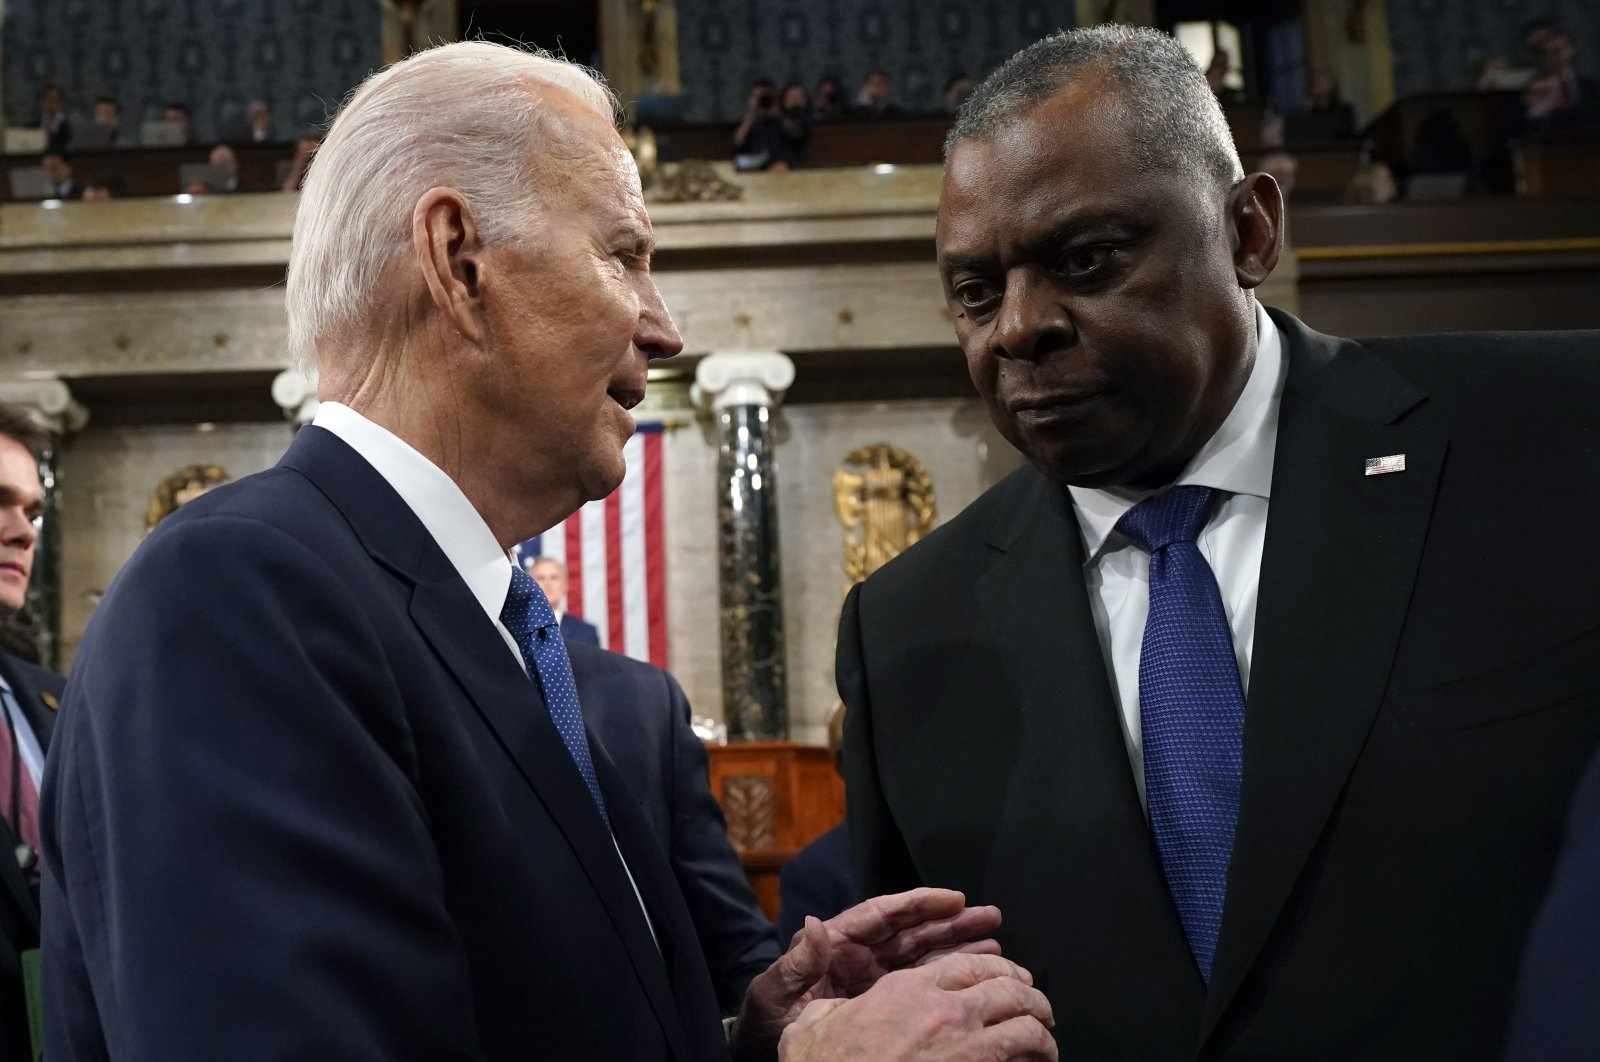 U.S. President Joe Biden (L) speaks to Defense Secretary Lloyd Austin at the US Capitol in Washington, D.C., U.S., Feb. 7, 2023. (Getty Images)